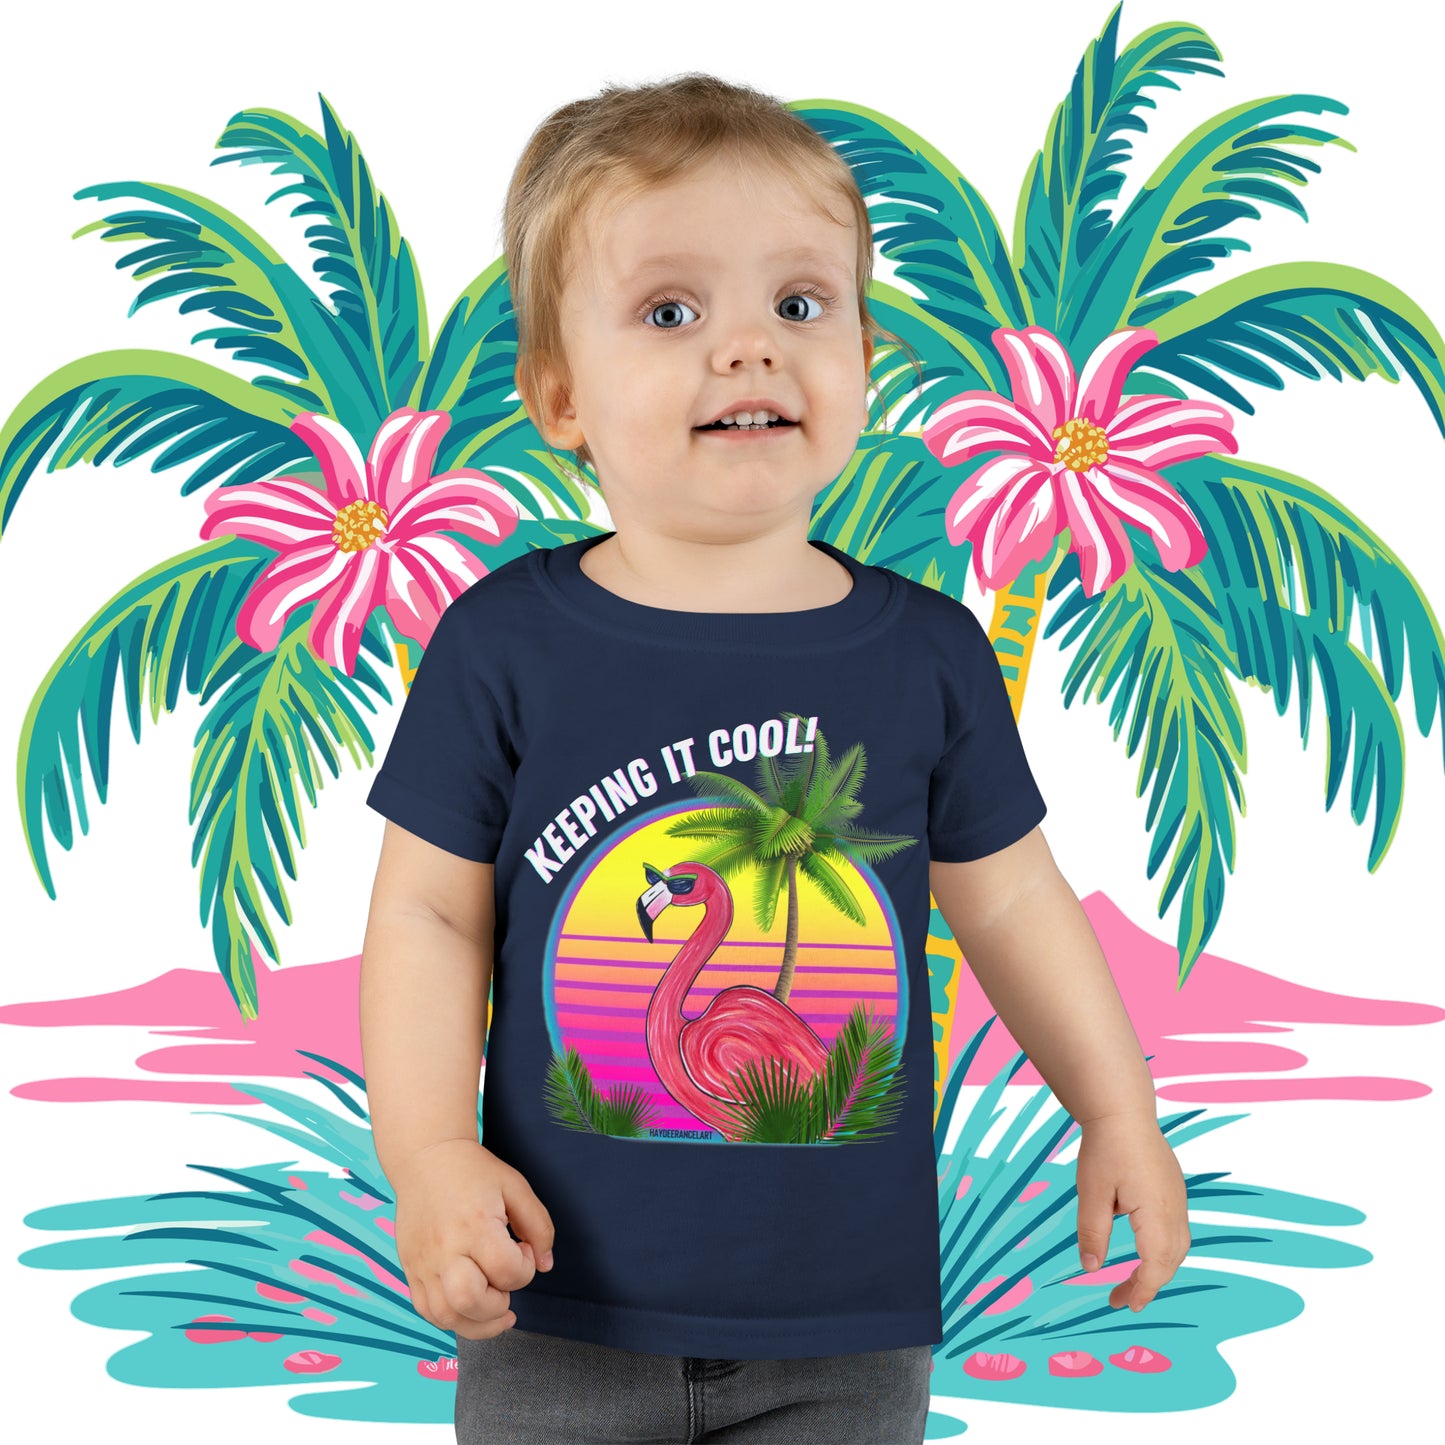 Keeping It Cool Flamingo Beach Sunset Palm Trees Grey Unisex Toddler T-shirt